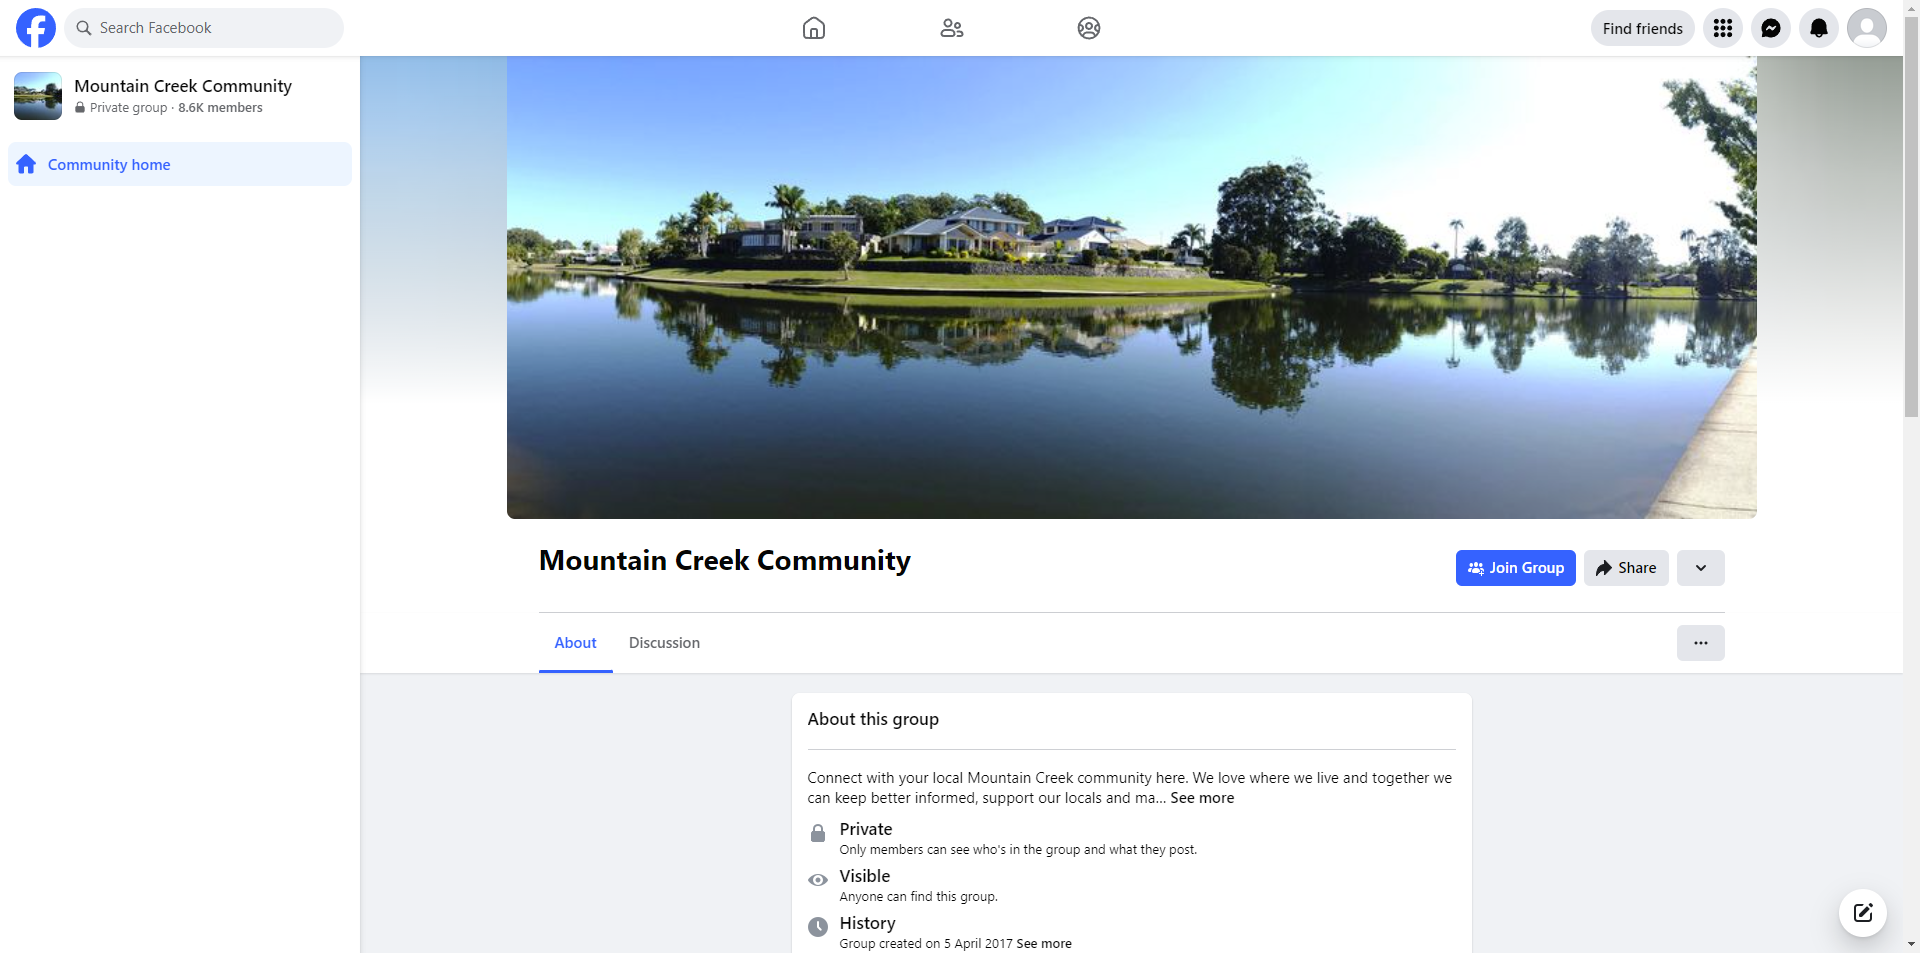 Mountain Creek Community